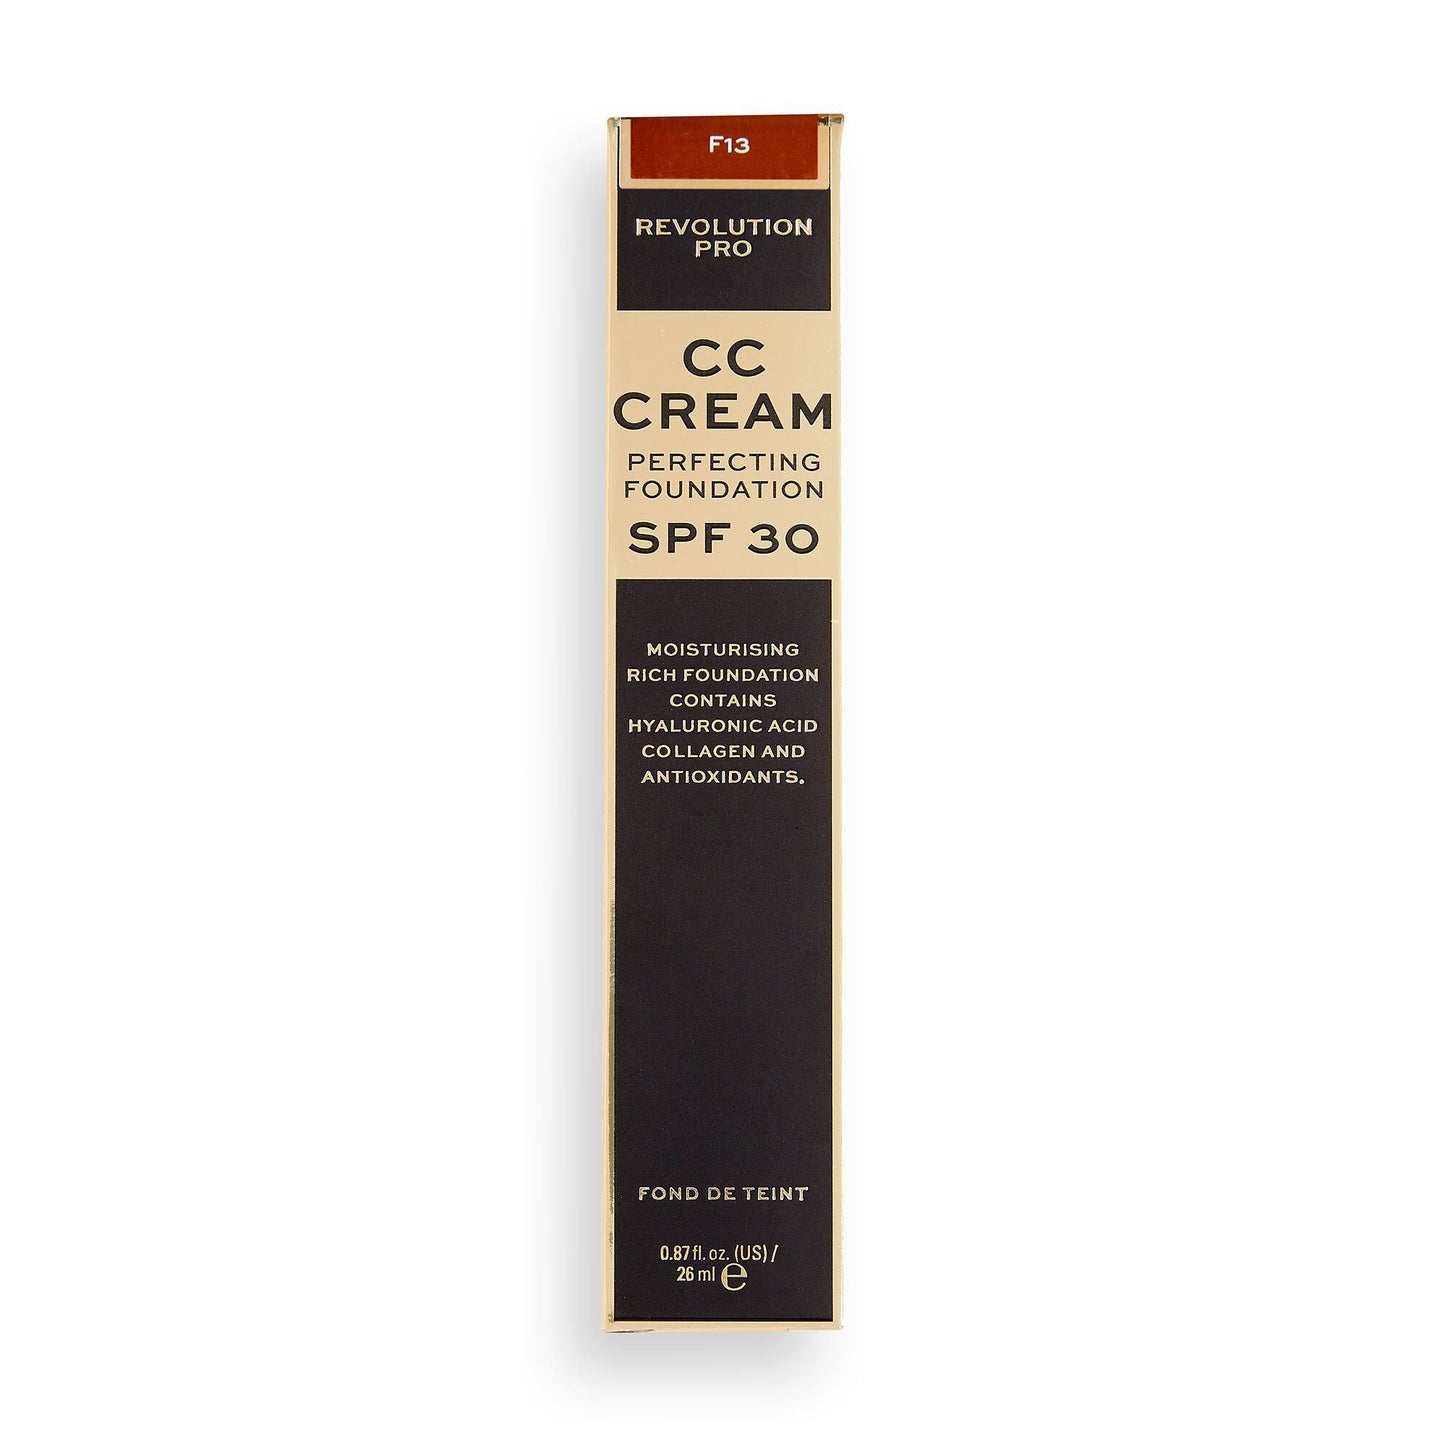 Revolution Pro CC Cream Perfecting Foundation SPF30 F13